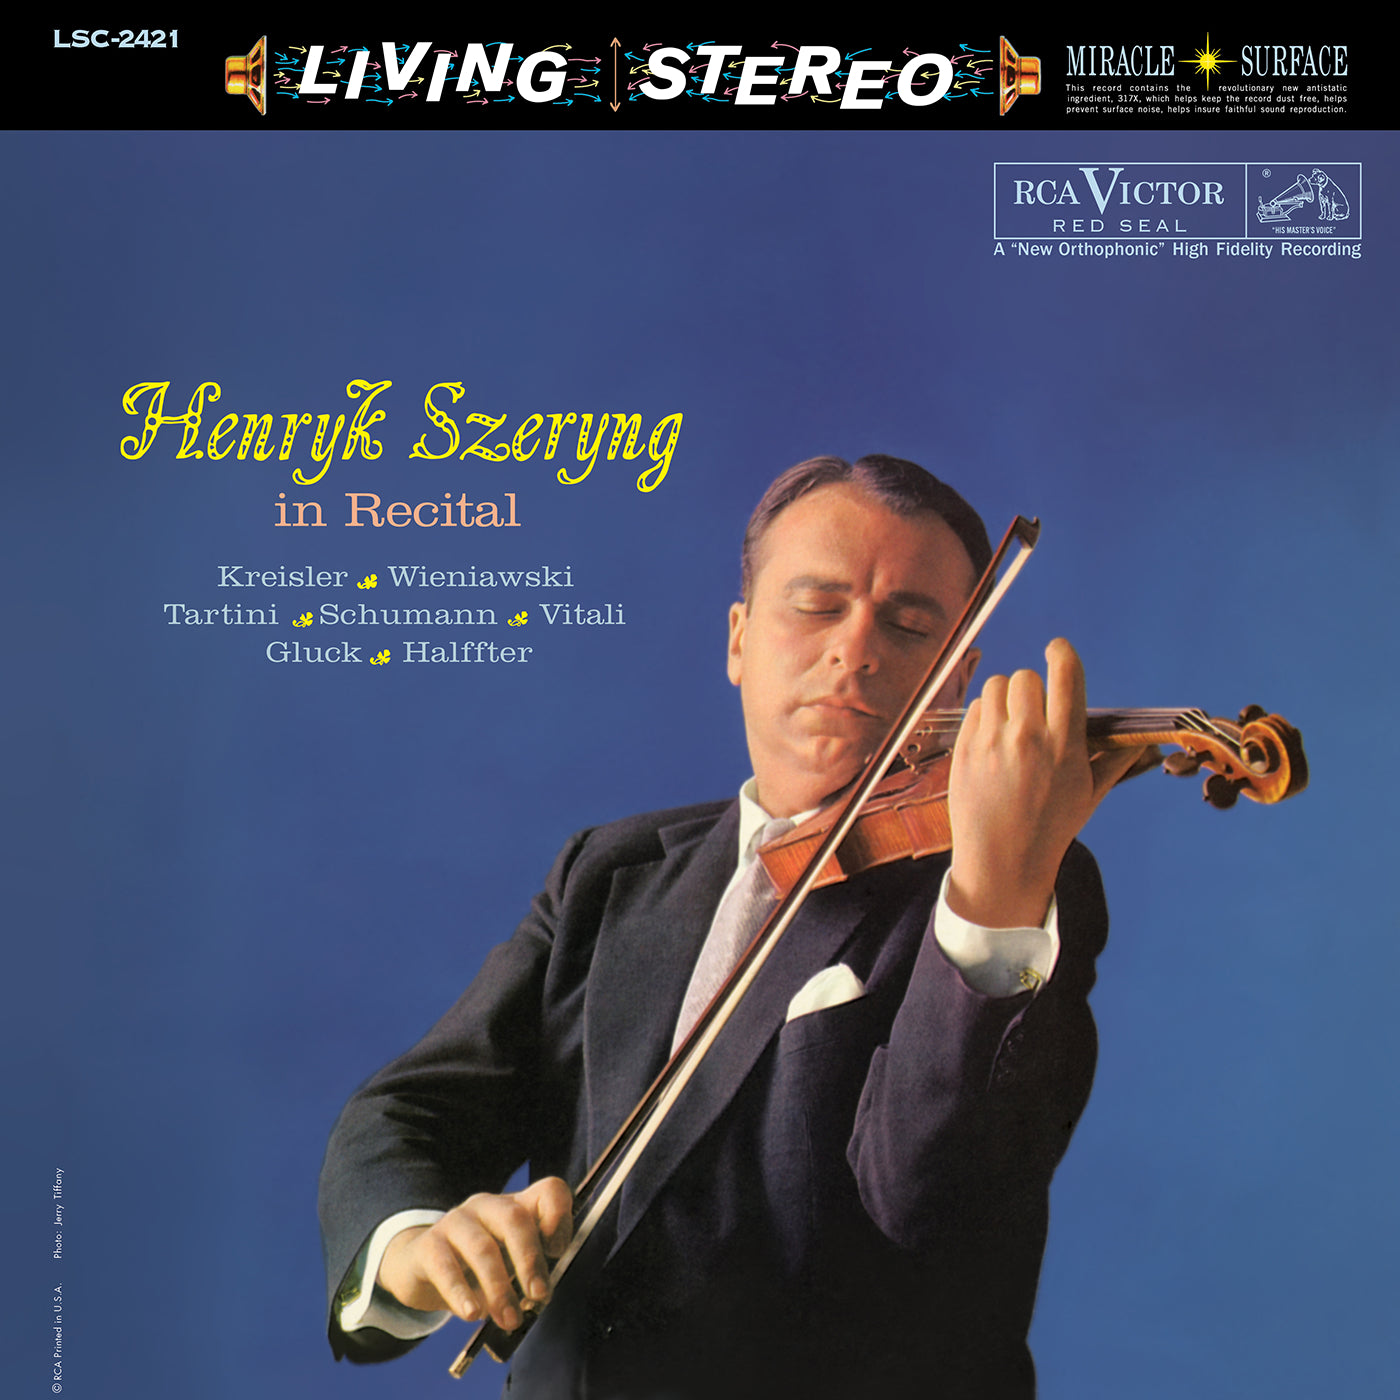 Henryk Szeryng - Henryk Szeryng in Recital